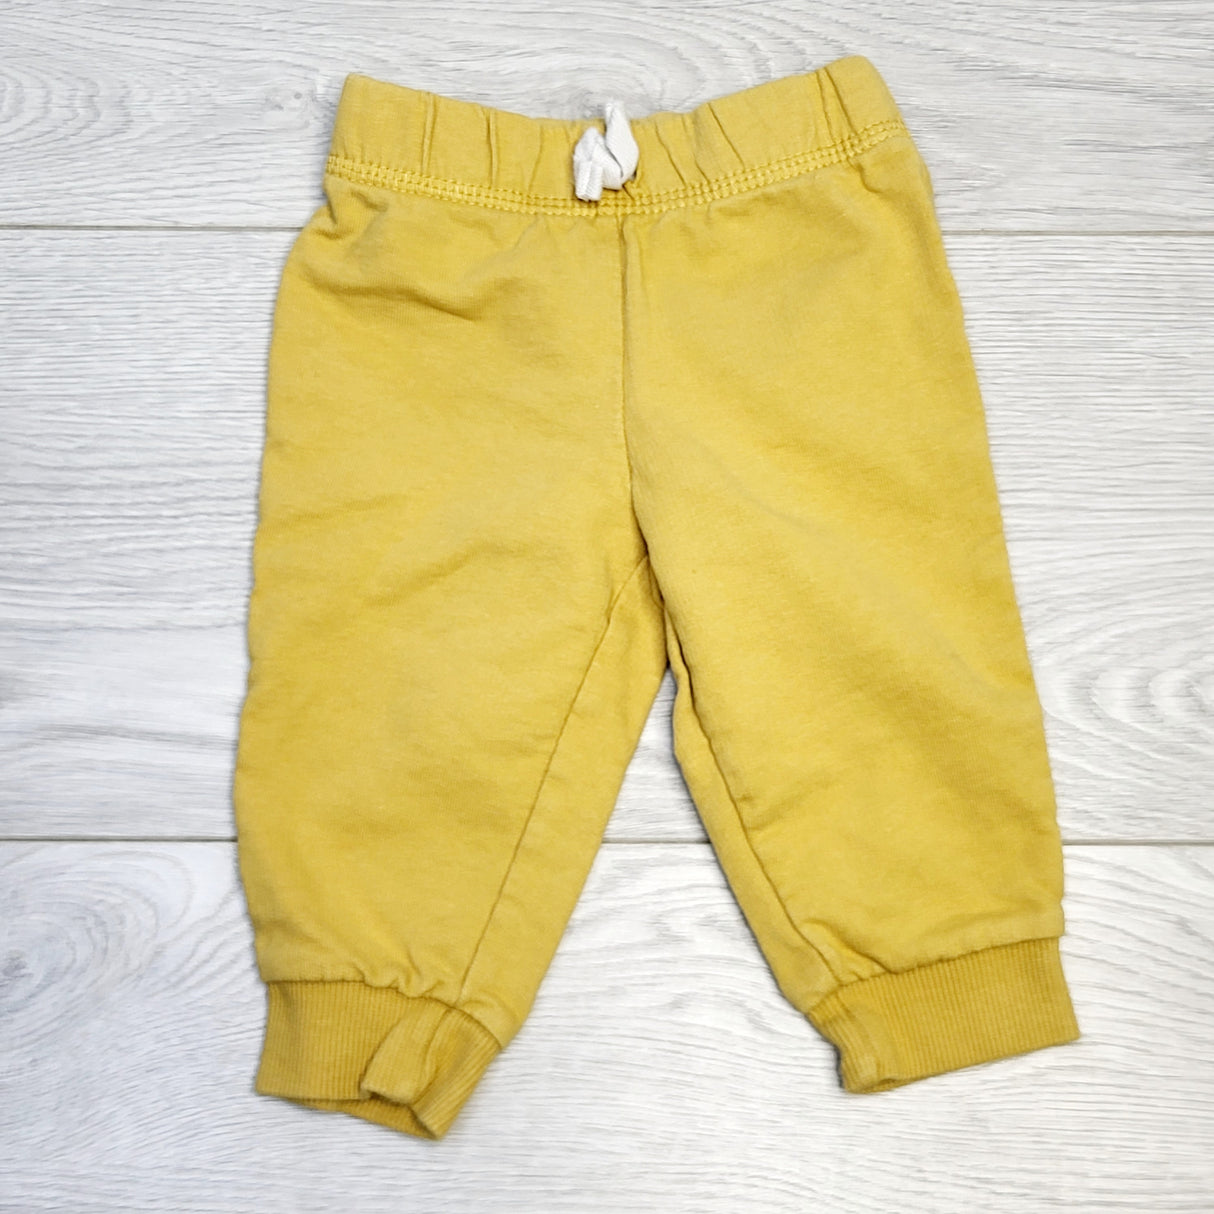 CHOL1 - Carters yellow cotton pants, 6 months